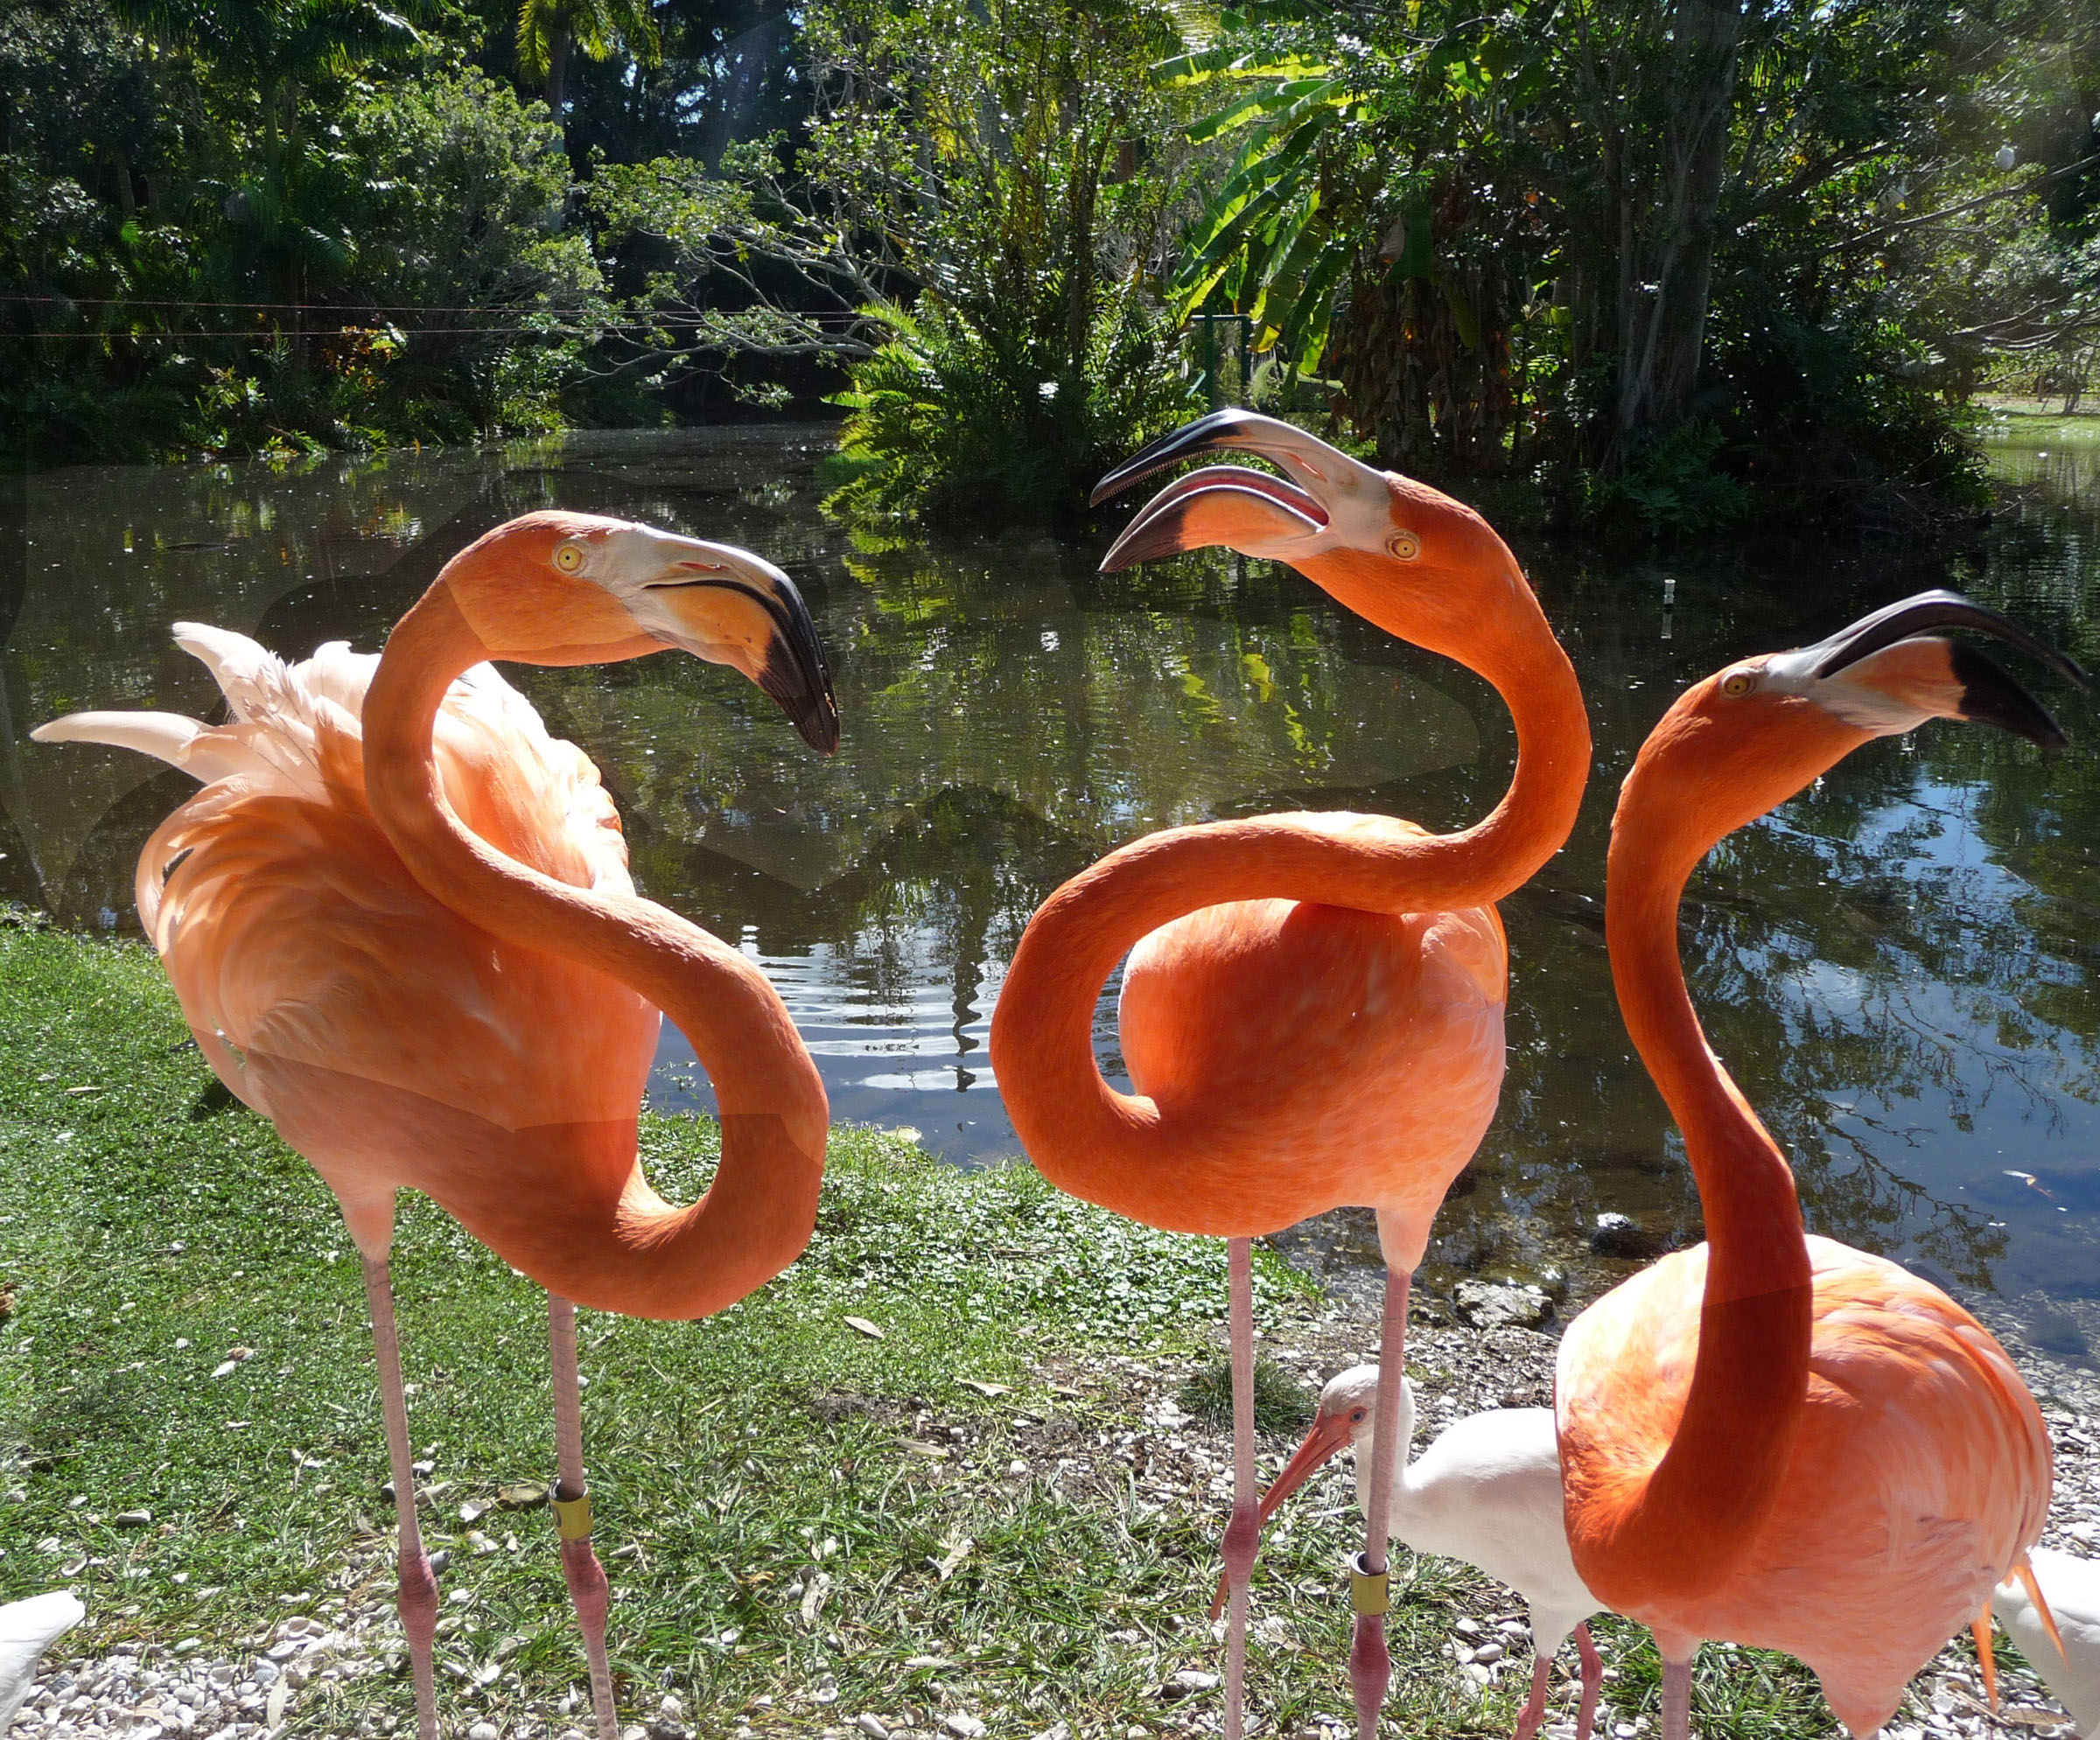 Flamingos at Jungle Gardens, Sarasota. Photo by Lucy Beebe Tobias